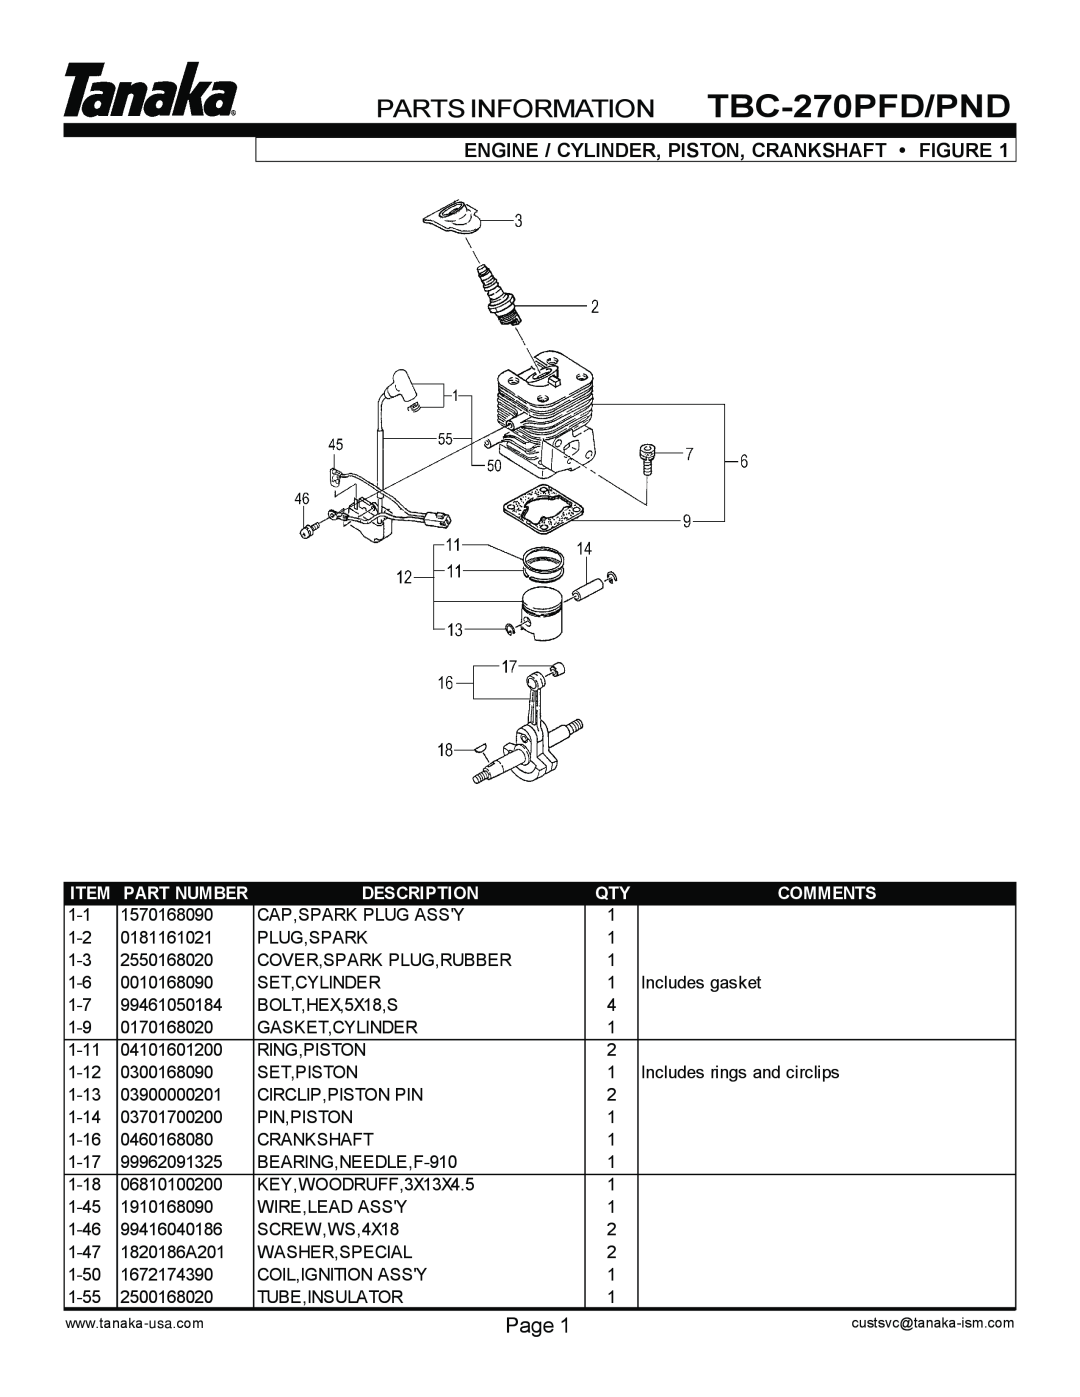 Tanaka TBC-270PND/PFD PARTS INFORMATION TBC-270PFD/PND, Page, Engine / Cylinder, Piston, Crankshaft Figure, Description 